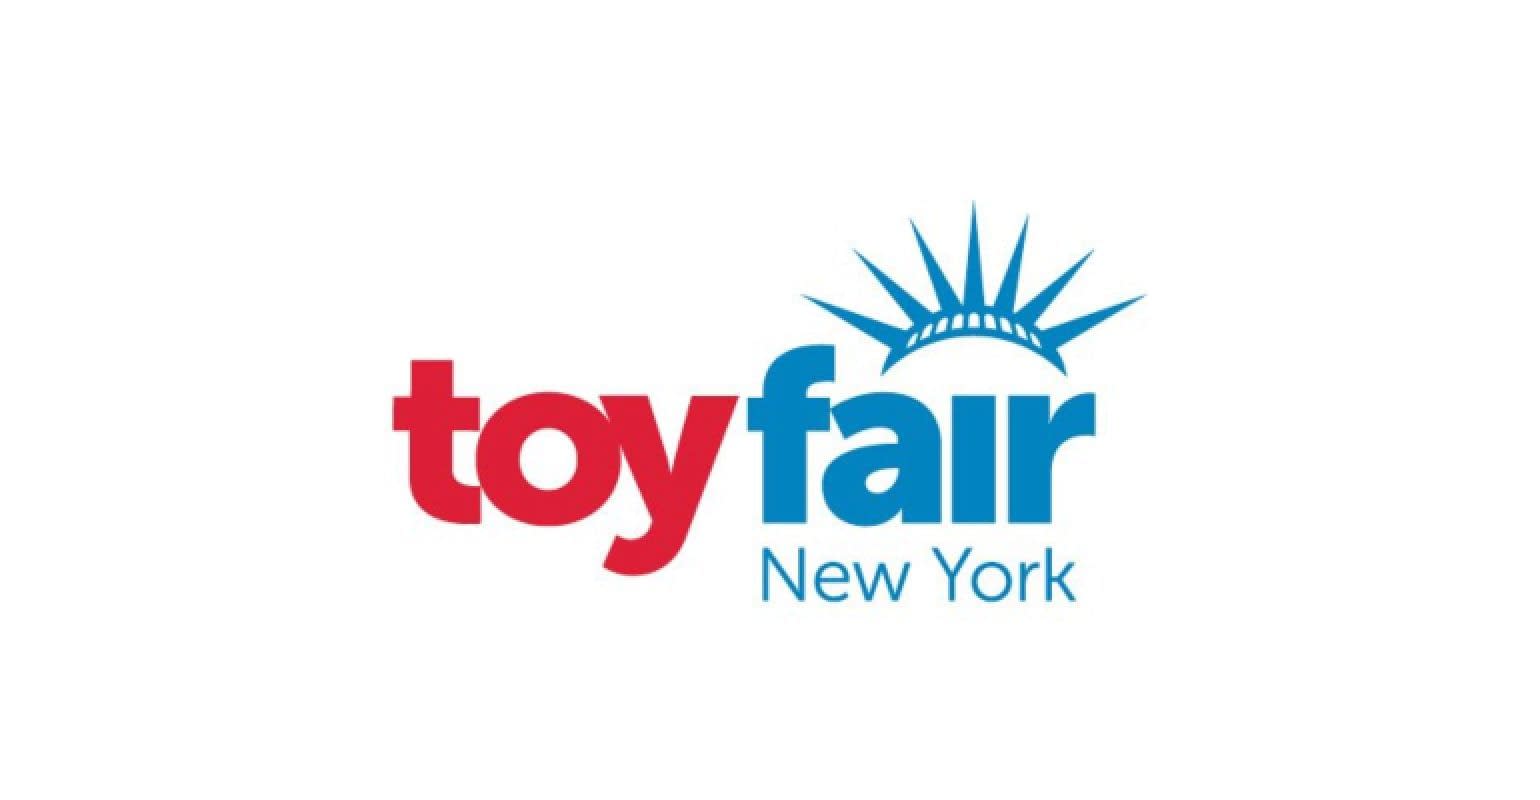 Toy fair